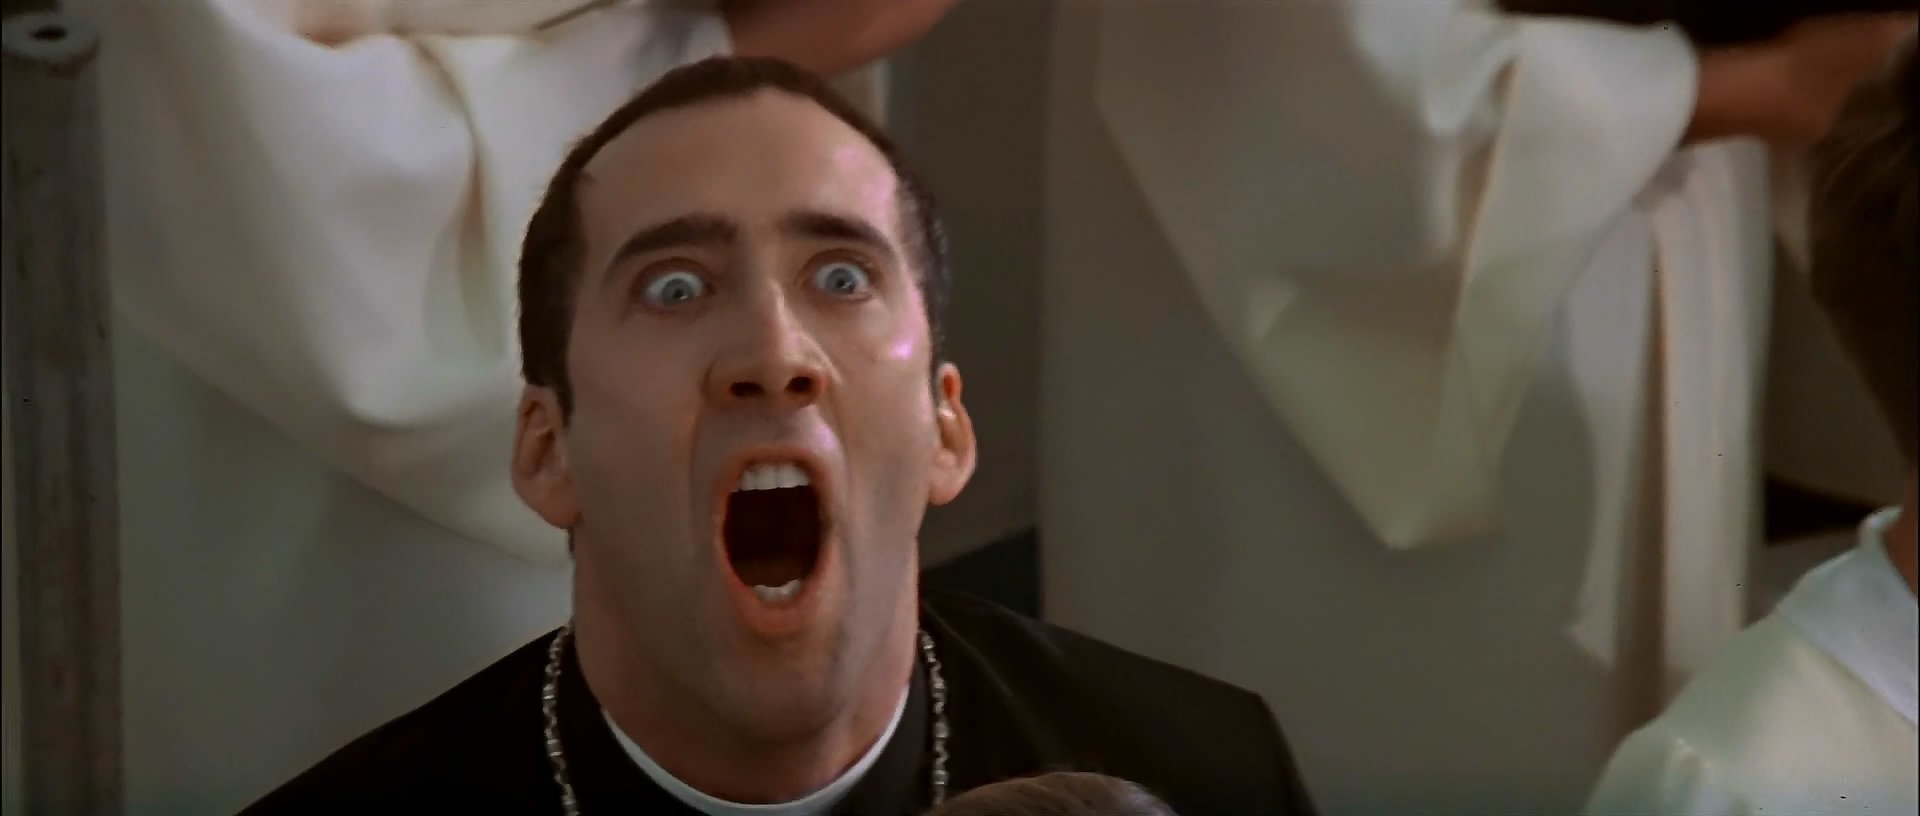 Nicolas Cage Contracara FaceOff escena canto iglesia